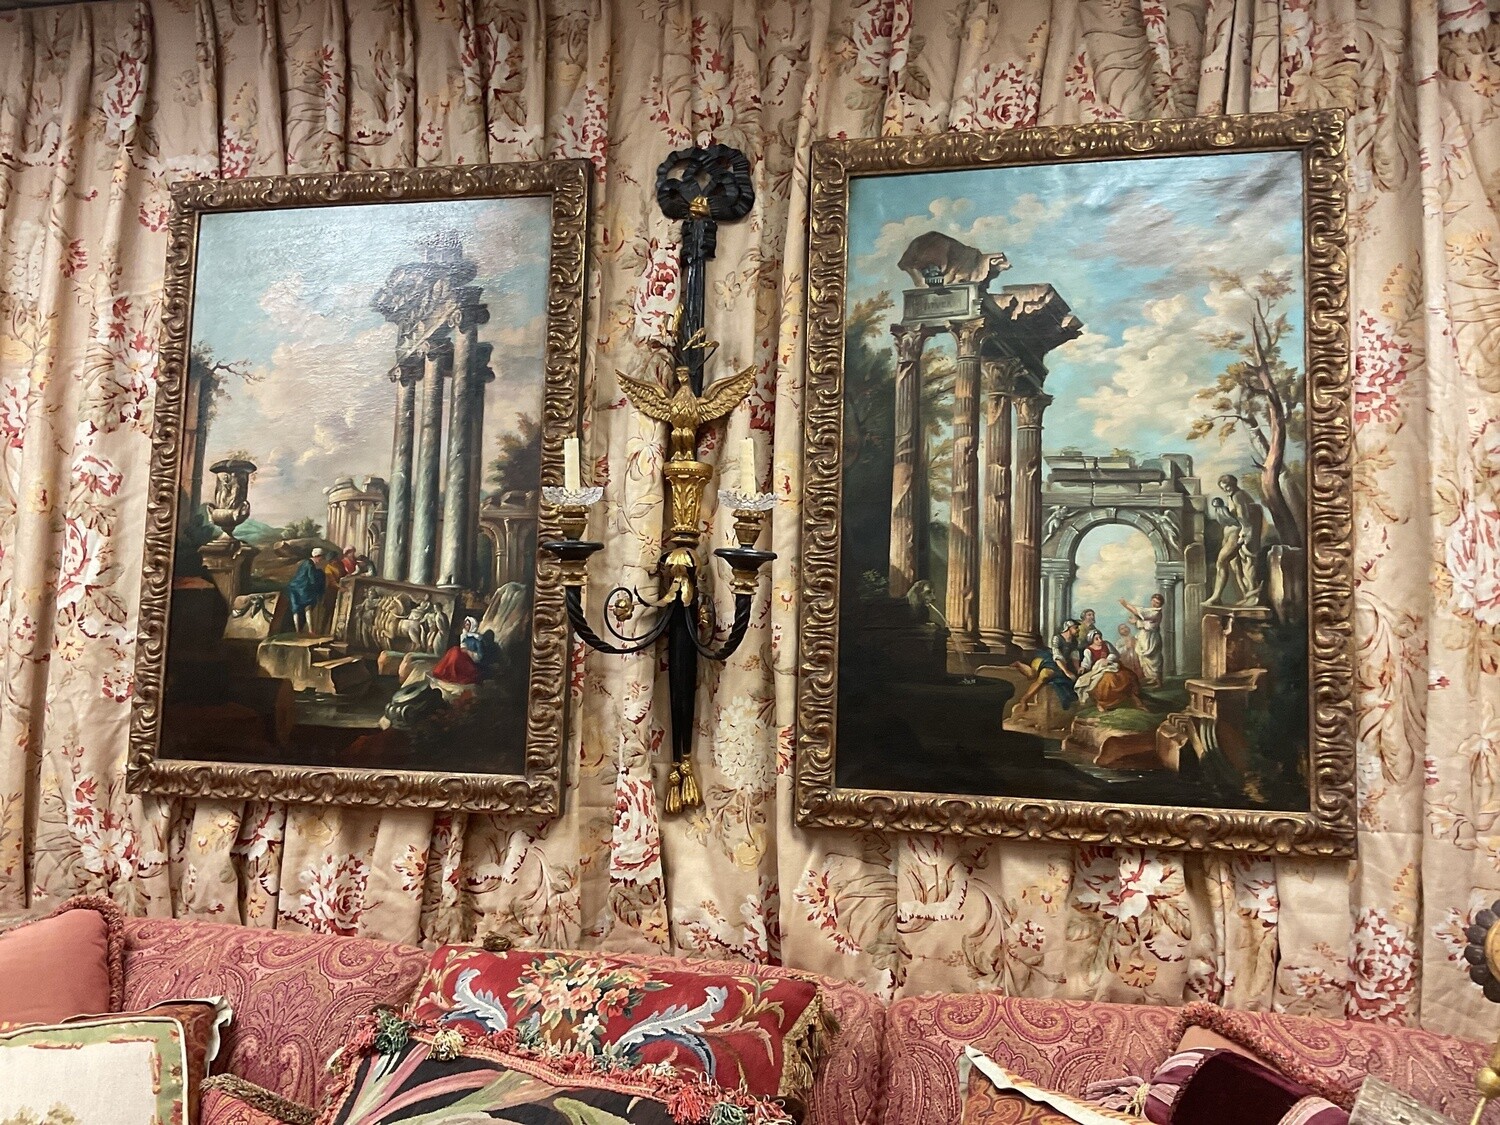 Pair of Italian Grand Tour Paintings